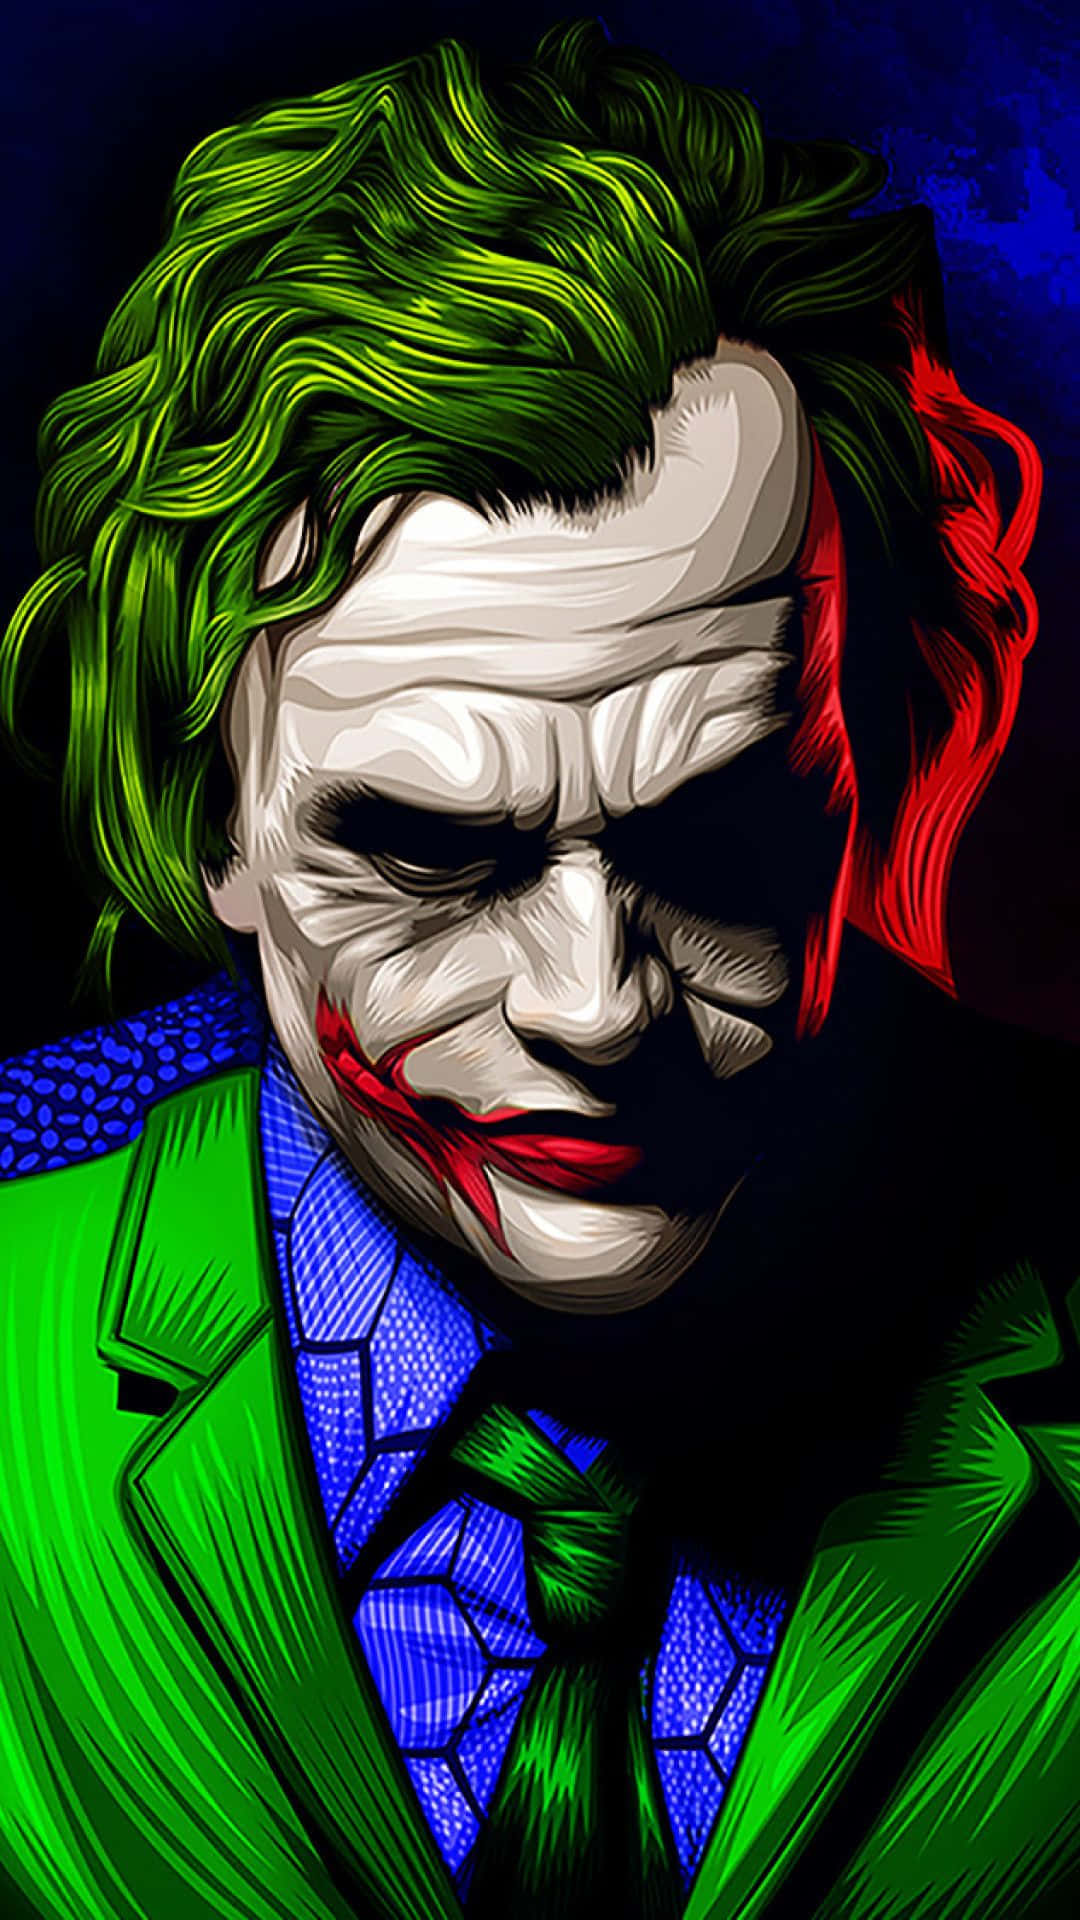 The iconic Joker